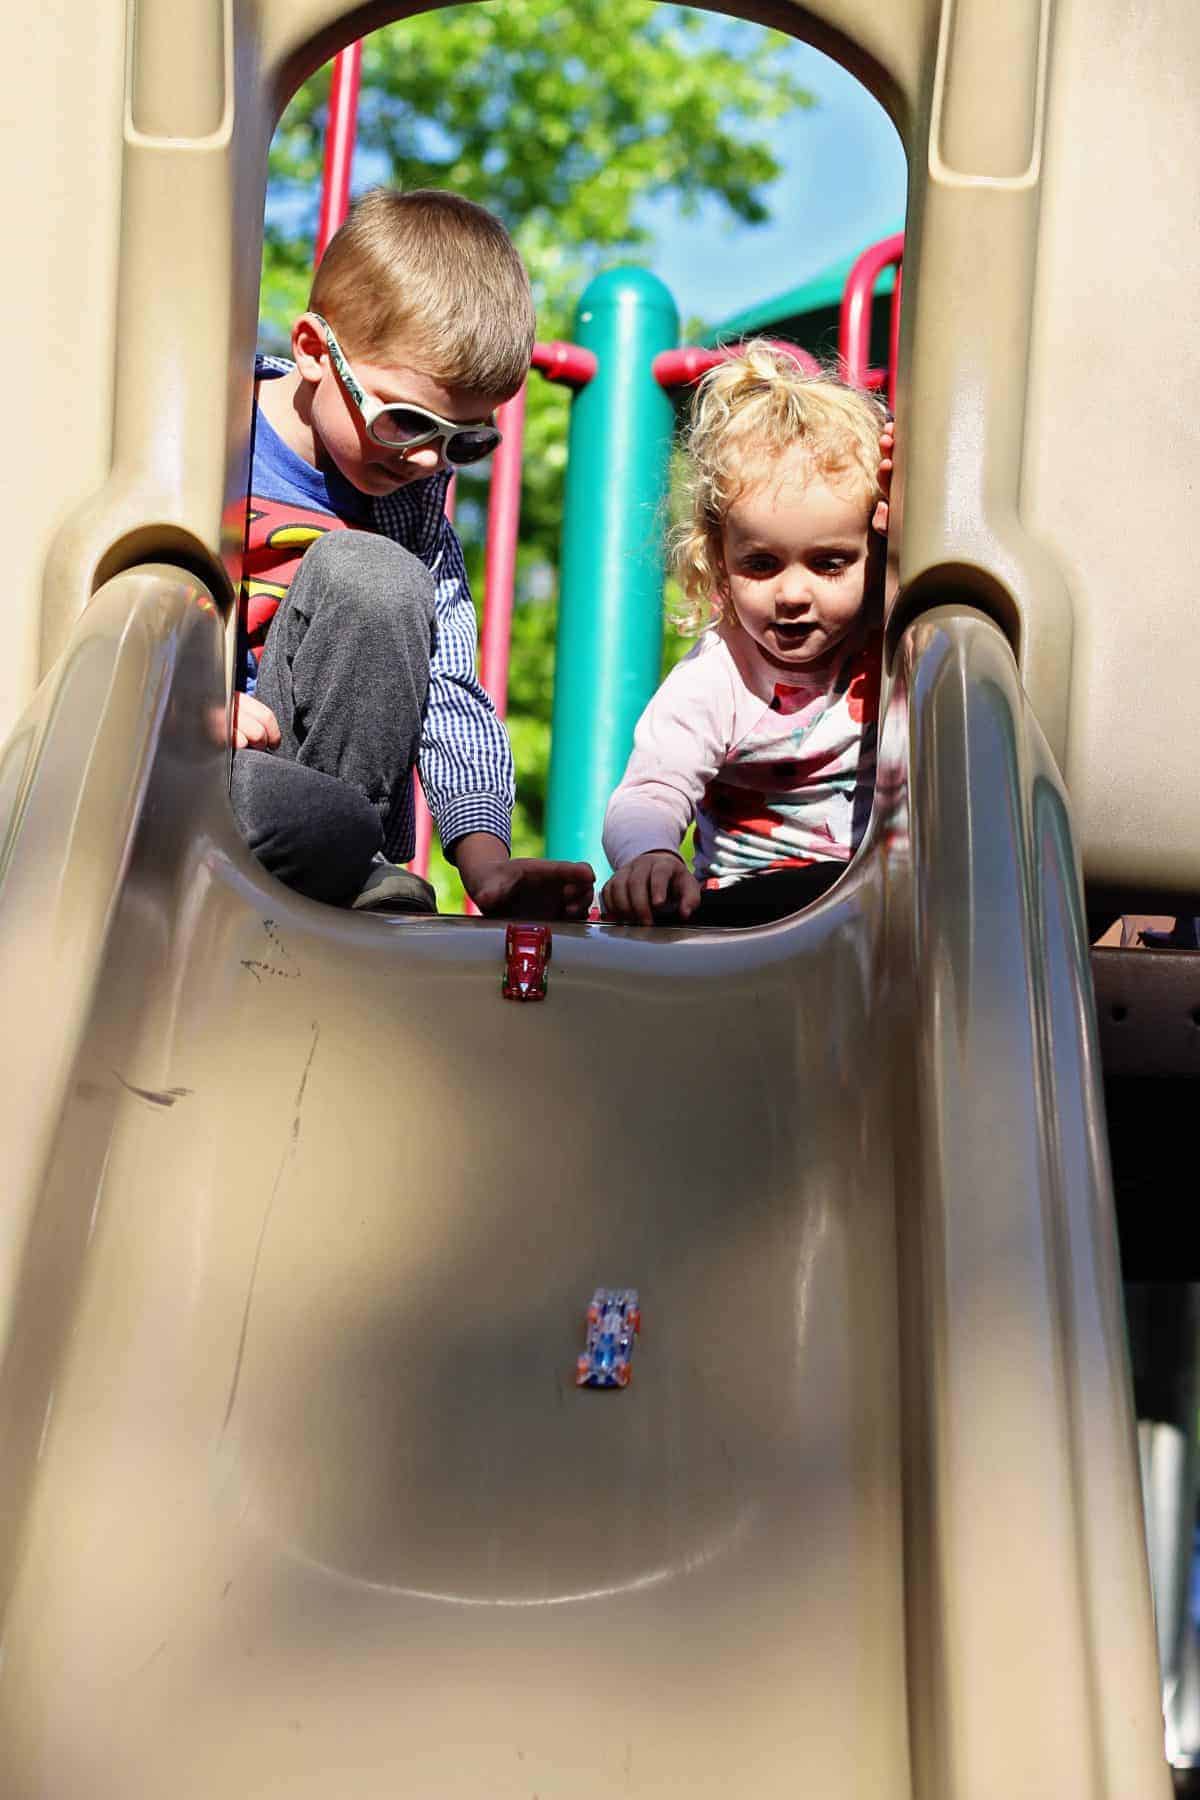 Slide Races Playground Games